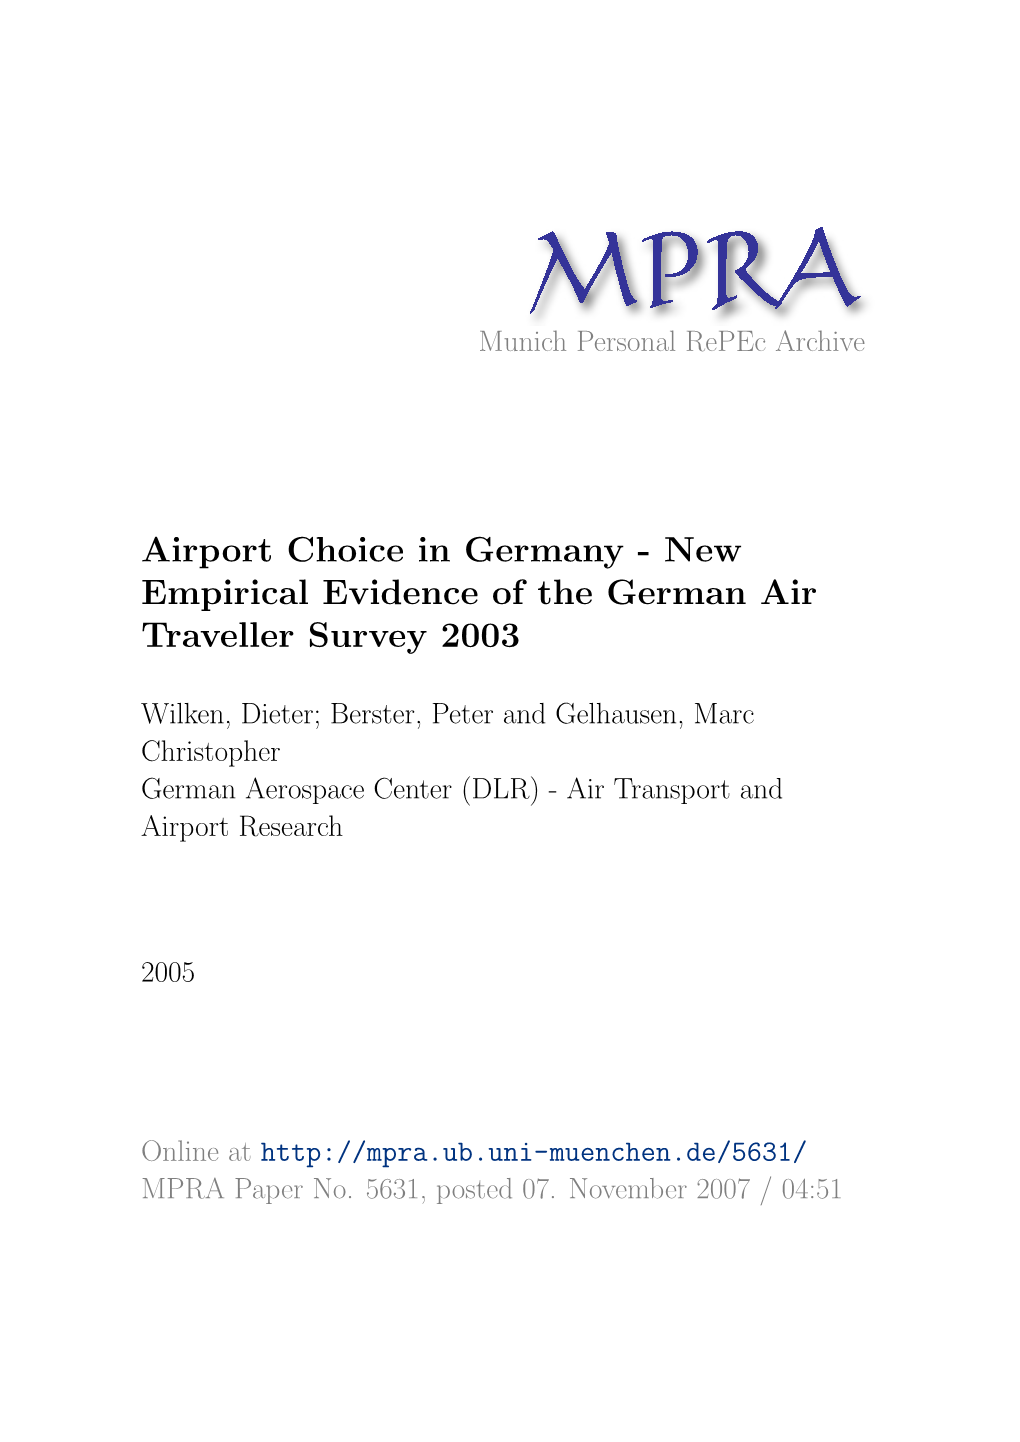 New Empirical Evidence of the German Air Traveller Survey 2003